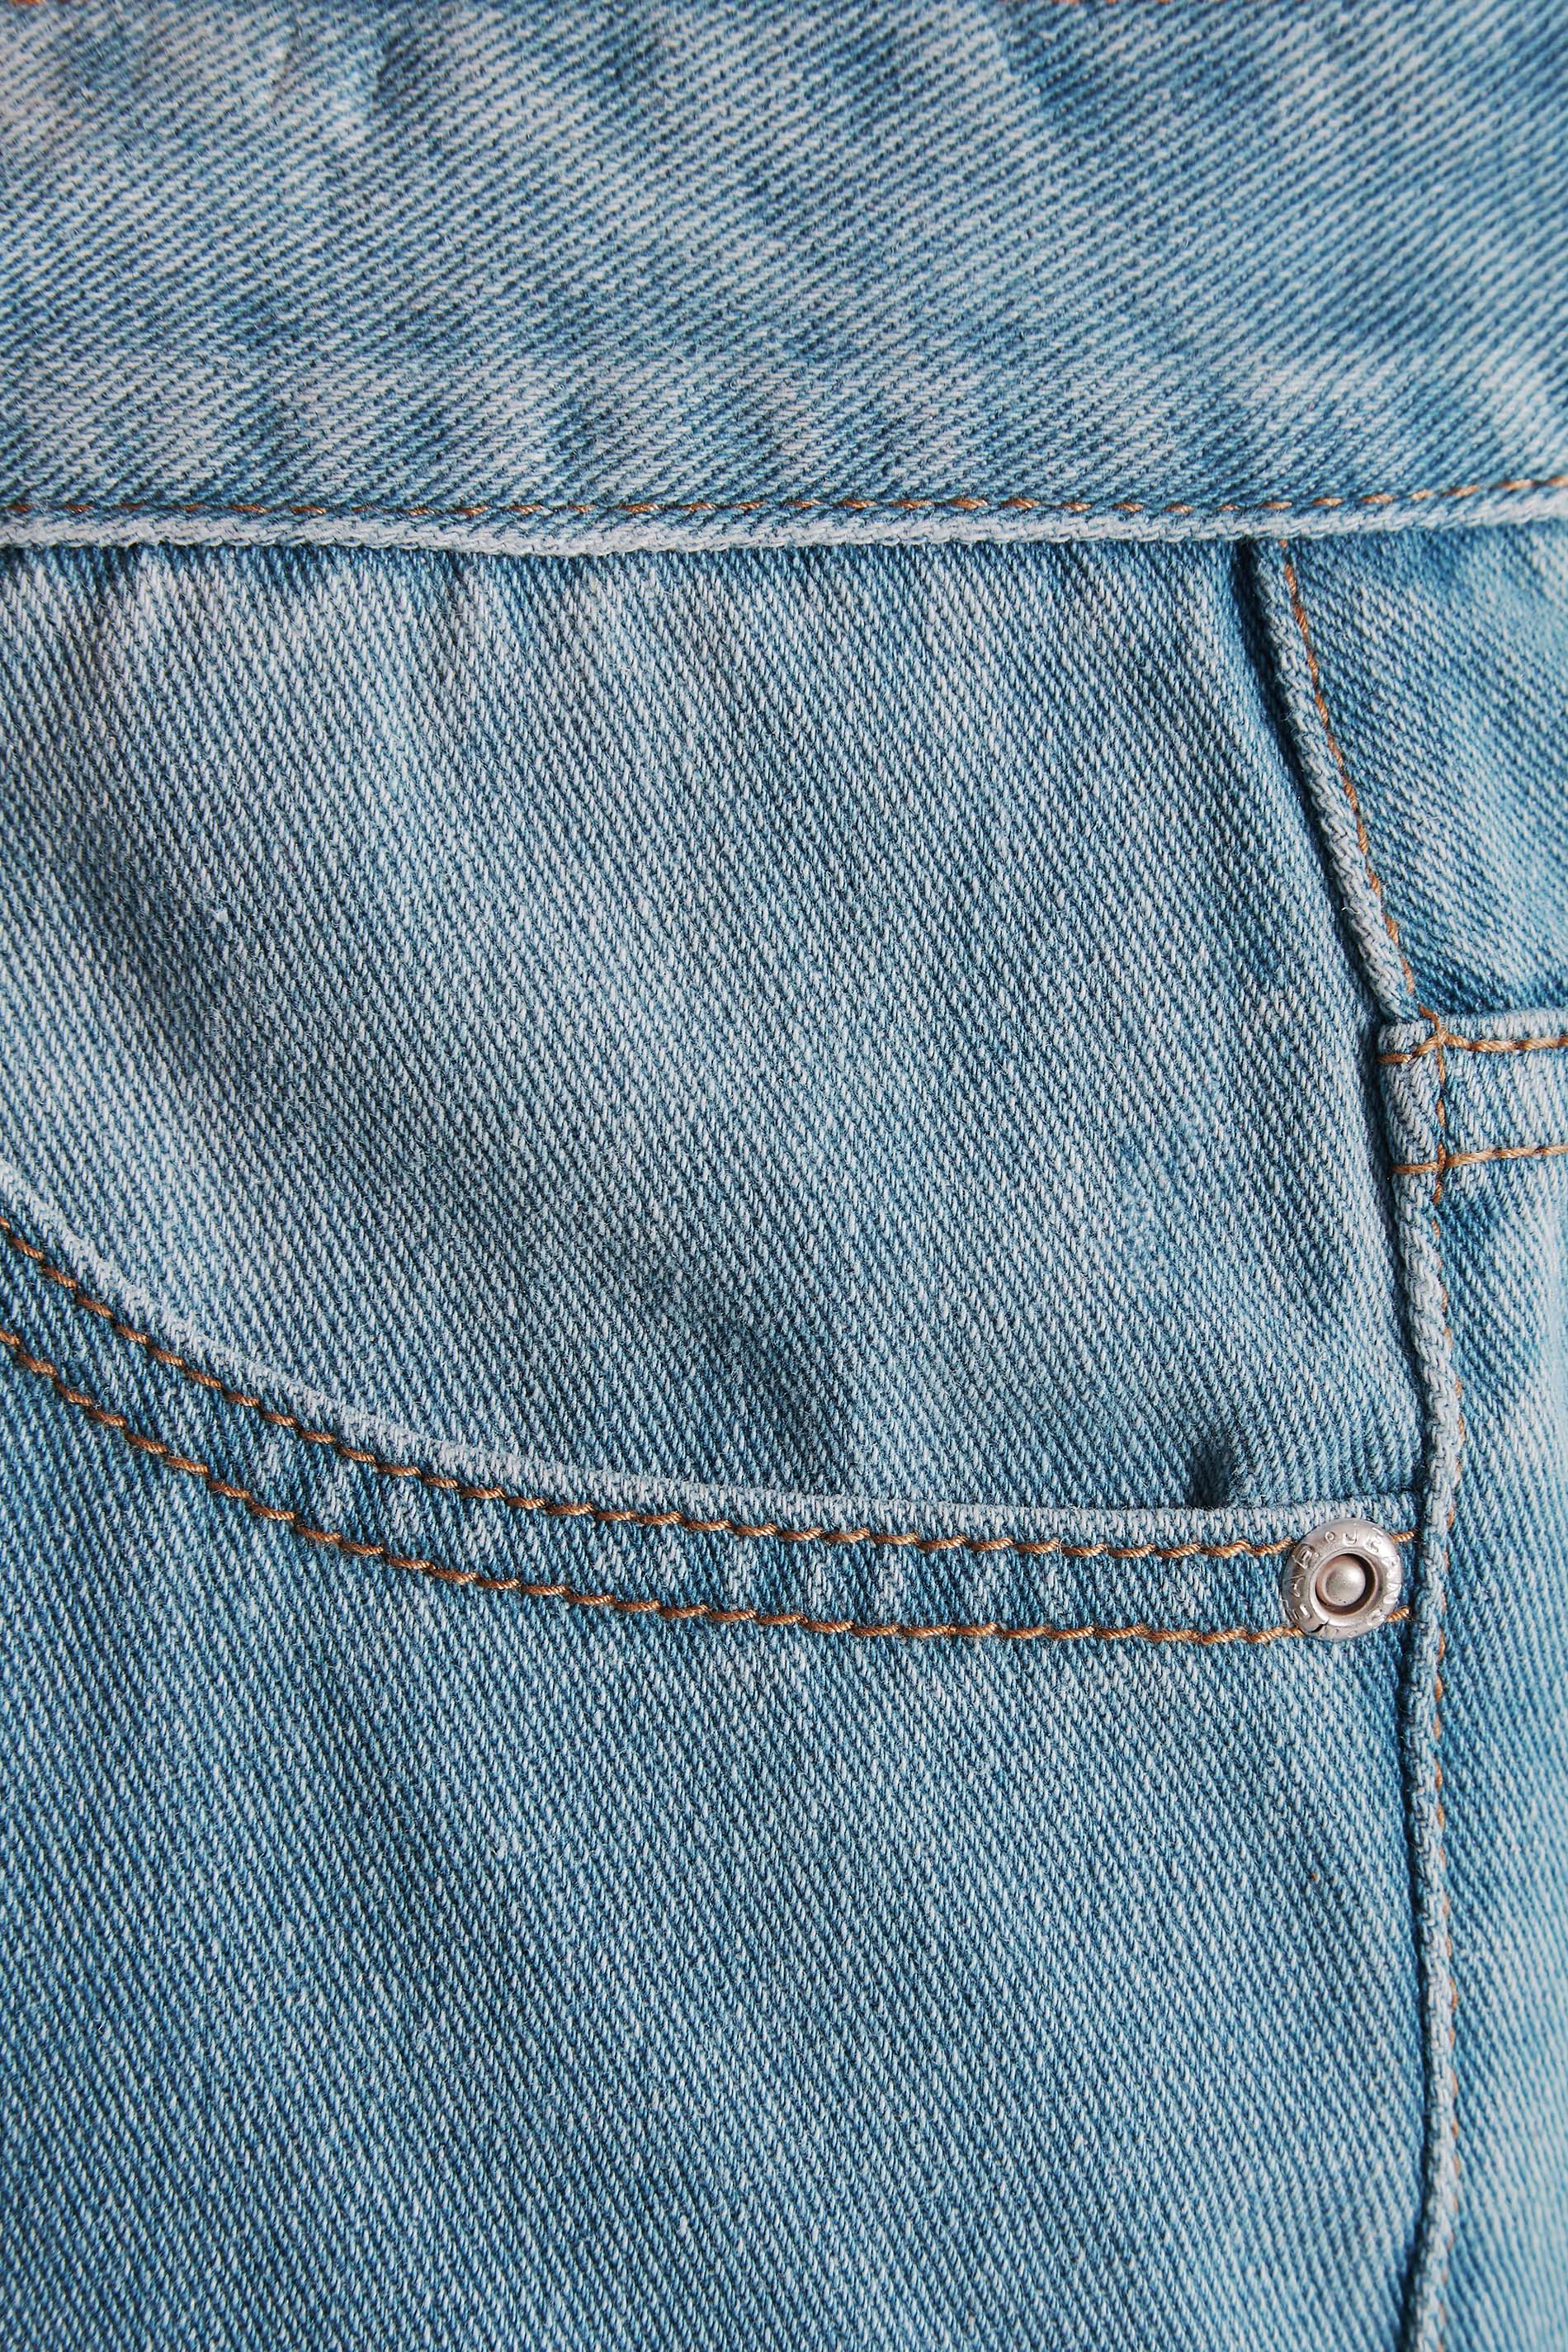 Plus Size Blue Denim Stretch Midi Skirt | Yours Clothing